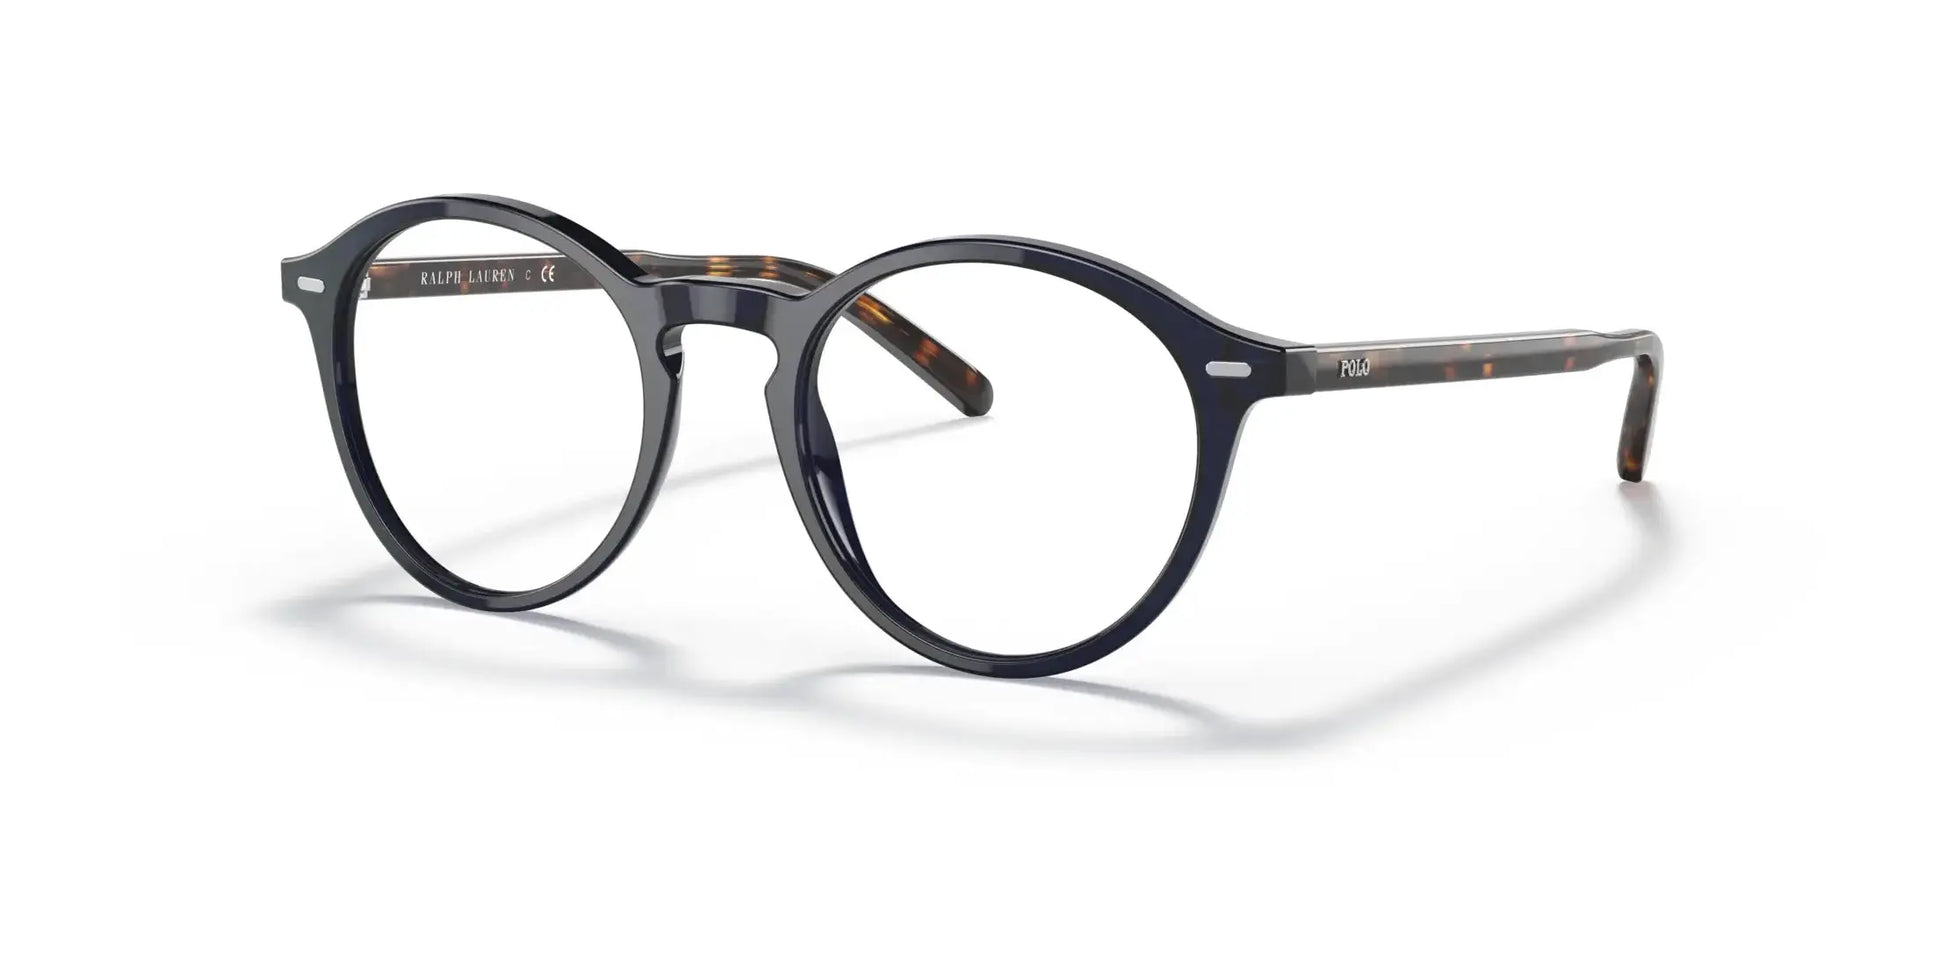 Polo PH2246 Eyeglasses Shiny Transparent Navy Blue